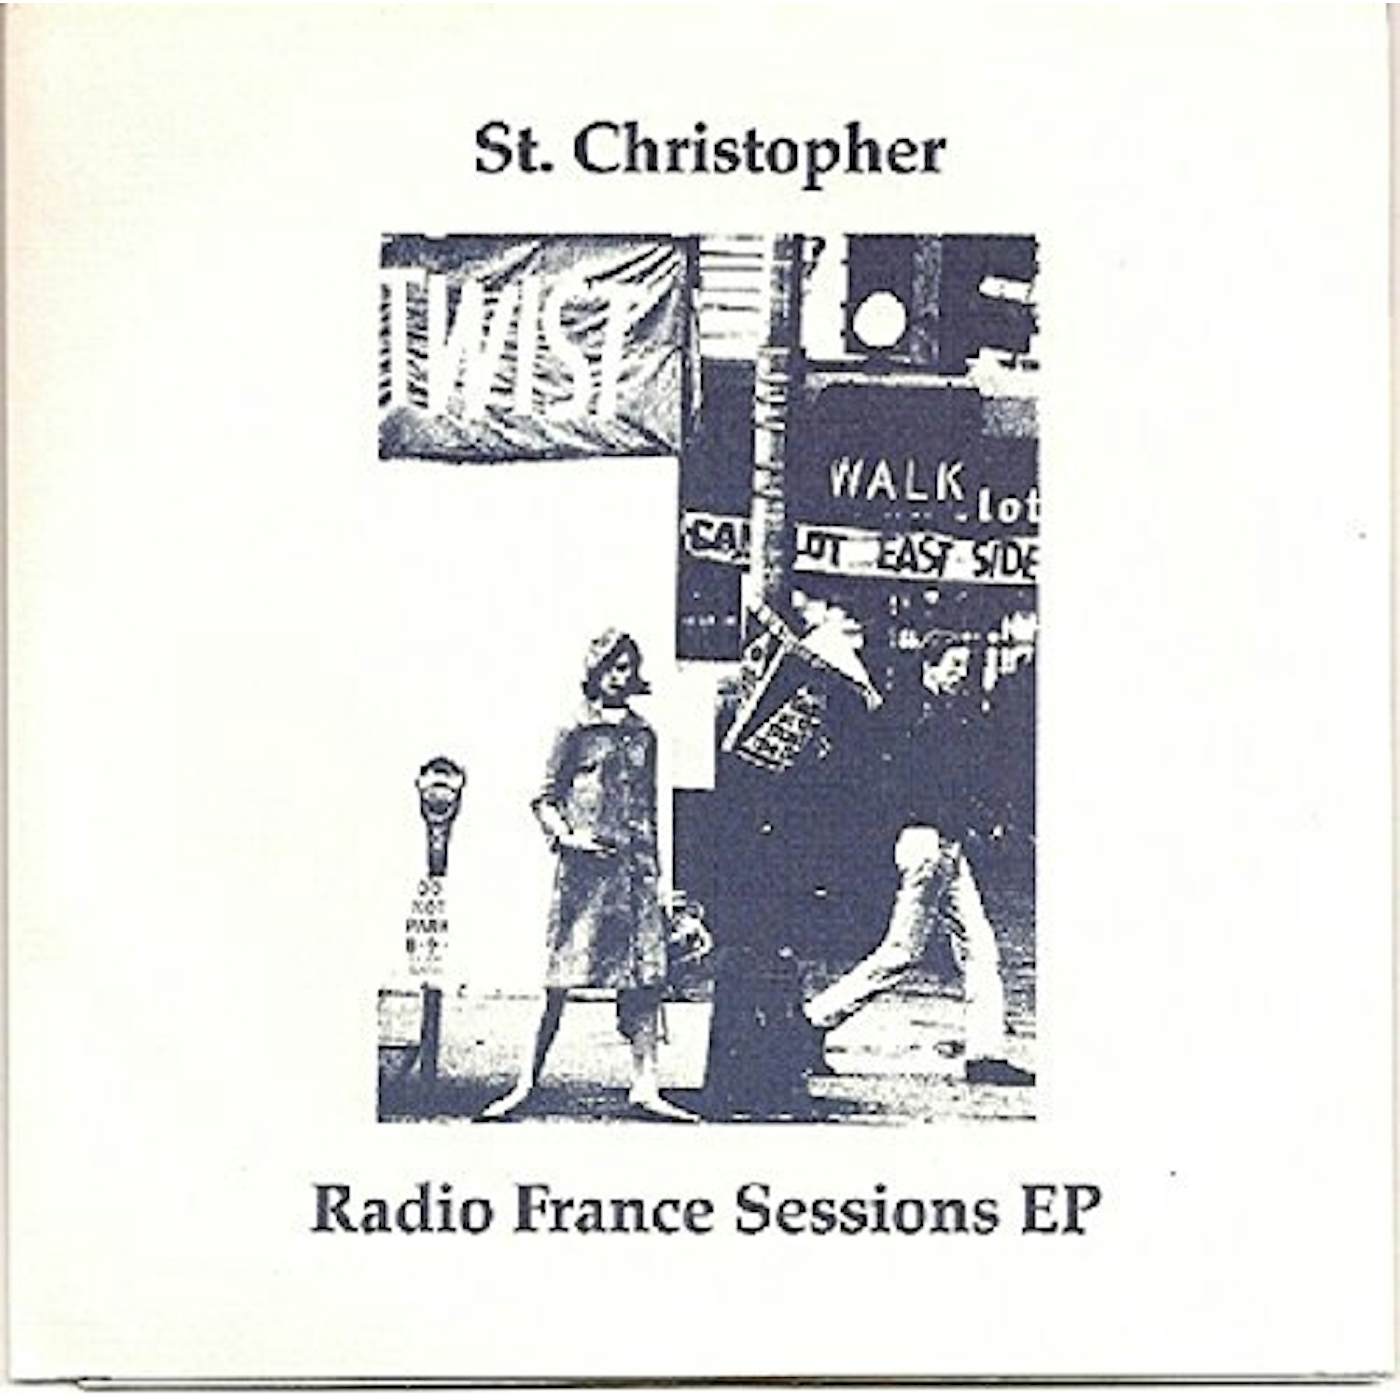 St. Christopher RADIO FRANCE SESSIONS Vinyl Record